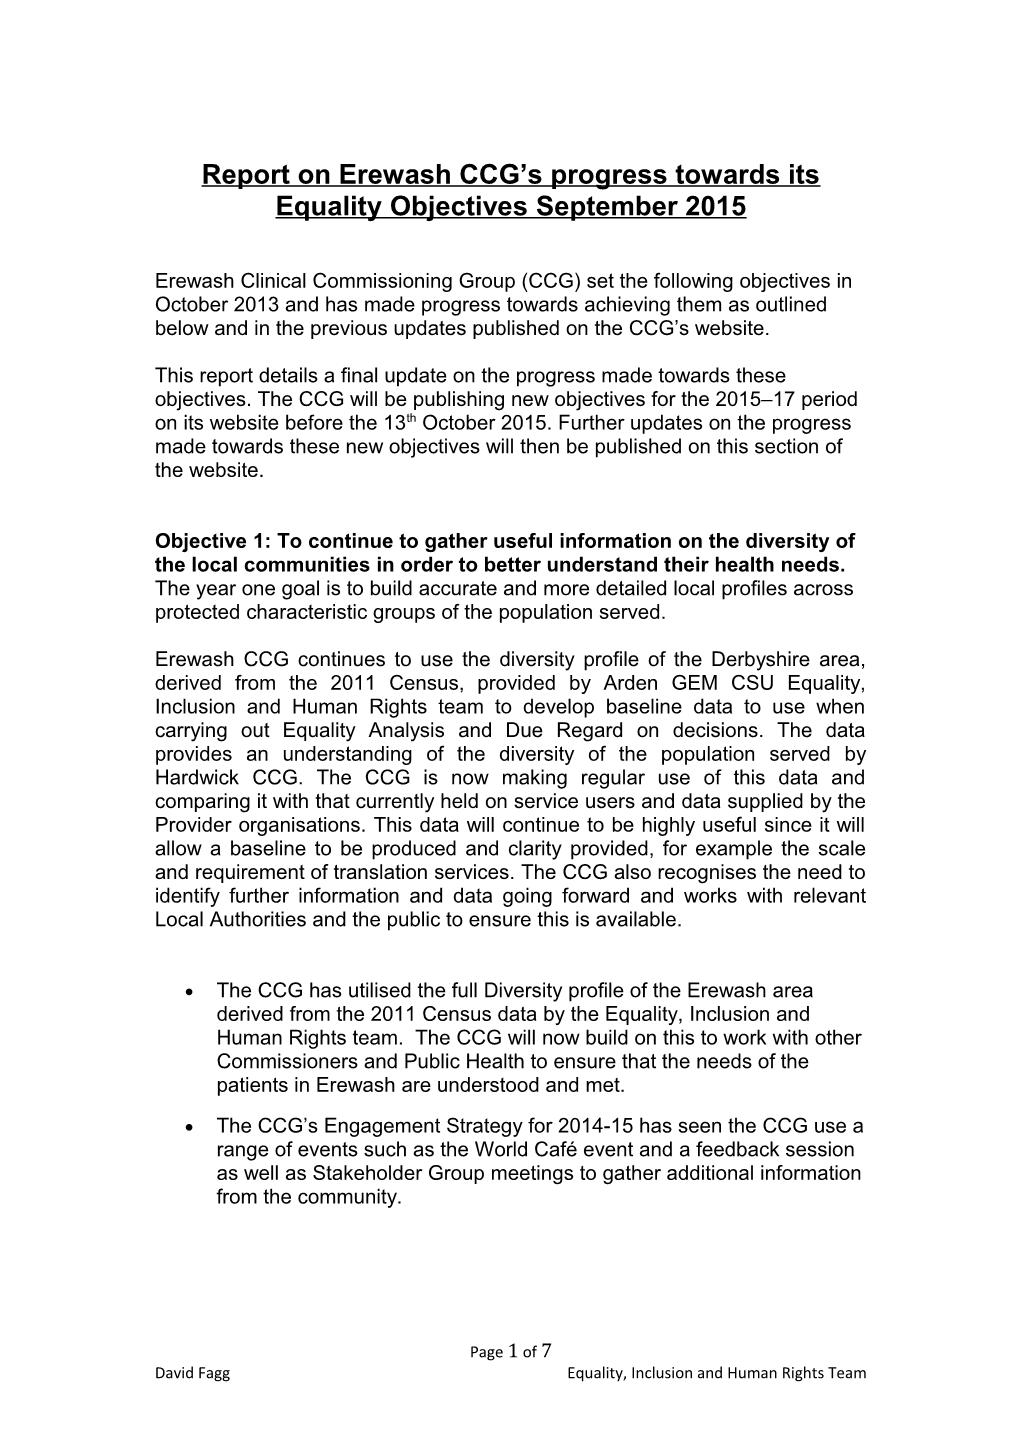 Report on Erewash CCG S Progress Towards Its Equality Objectives September 2015